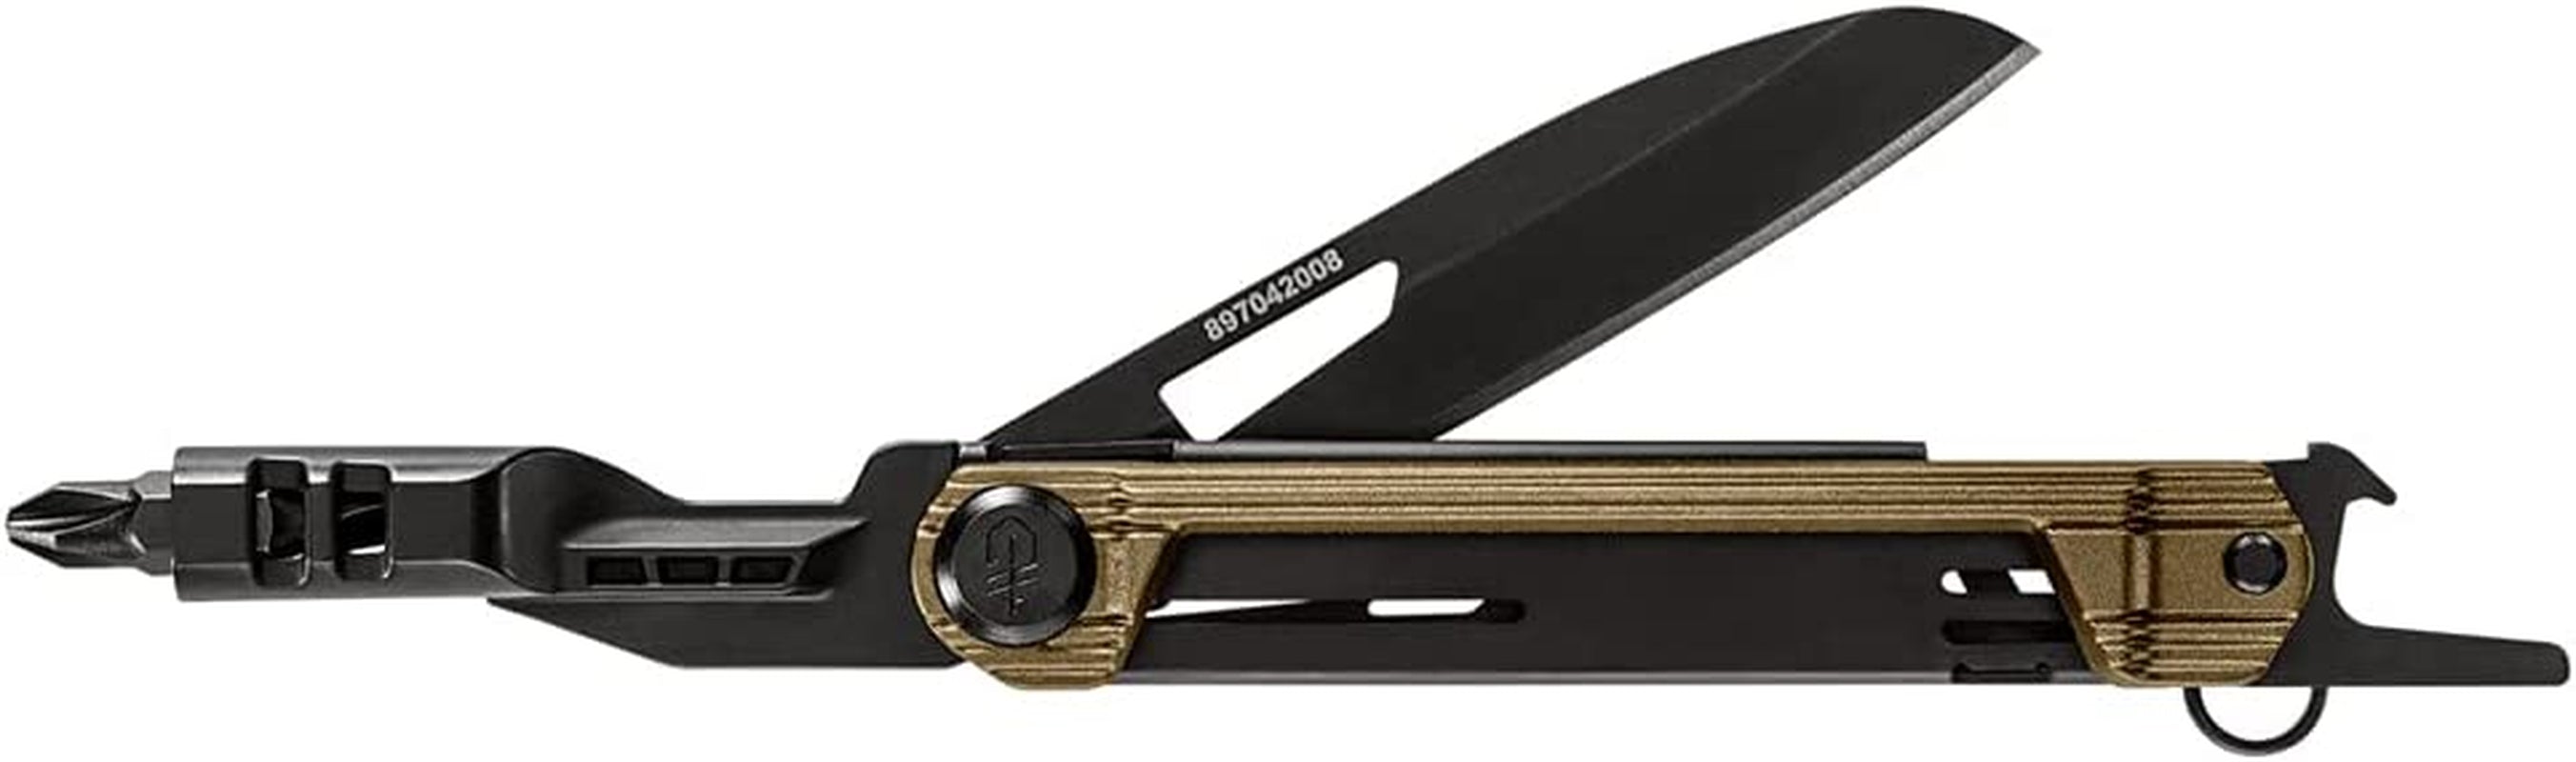 Gerber Gear, Gerber Gear Armbar Slim Drive, Pocket Knife Multitool with Screwdriver, Burnt Bronze